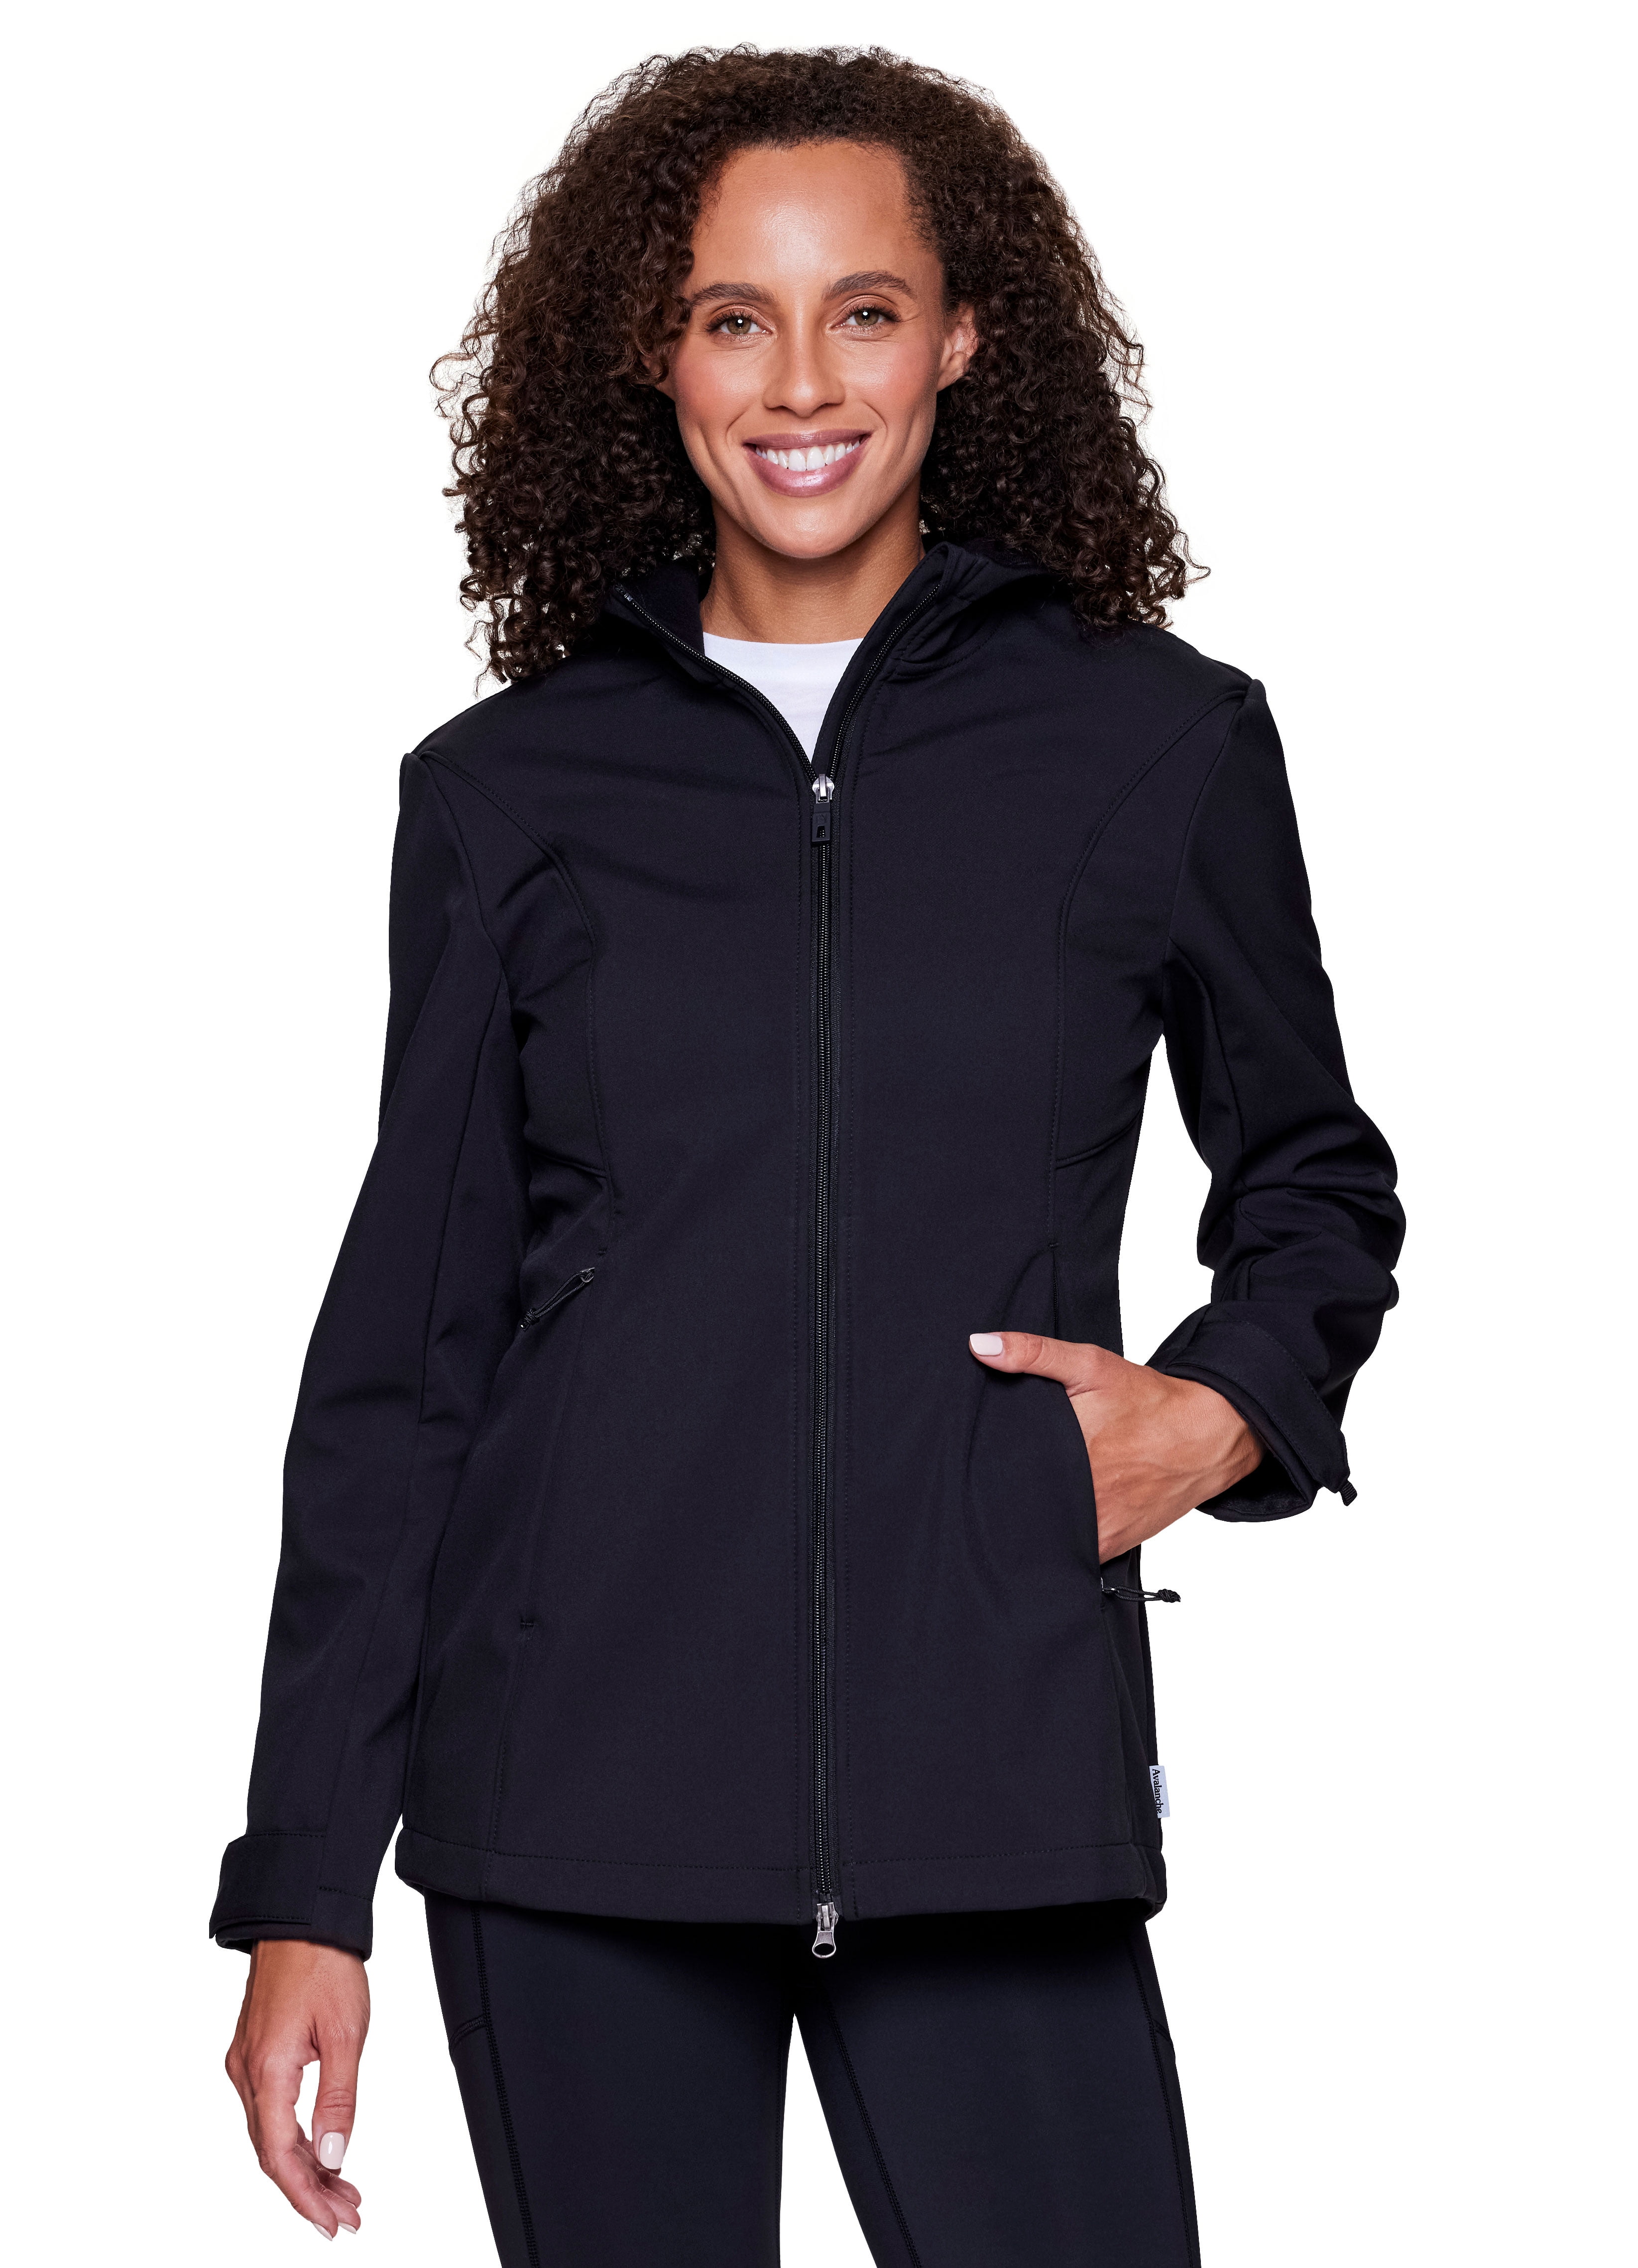 Avalanche Women's Fleece Lined Soft Shell Hoodie Rain Jacket With Zipper  Pockets 